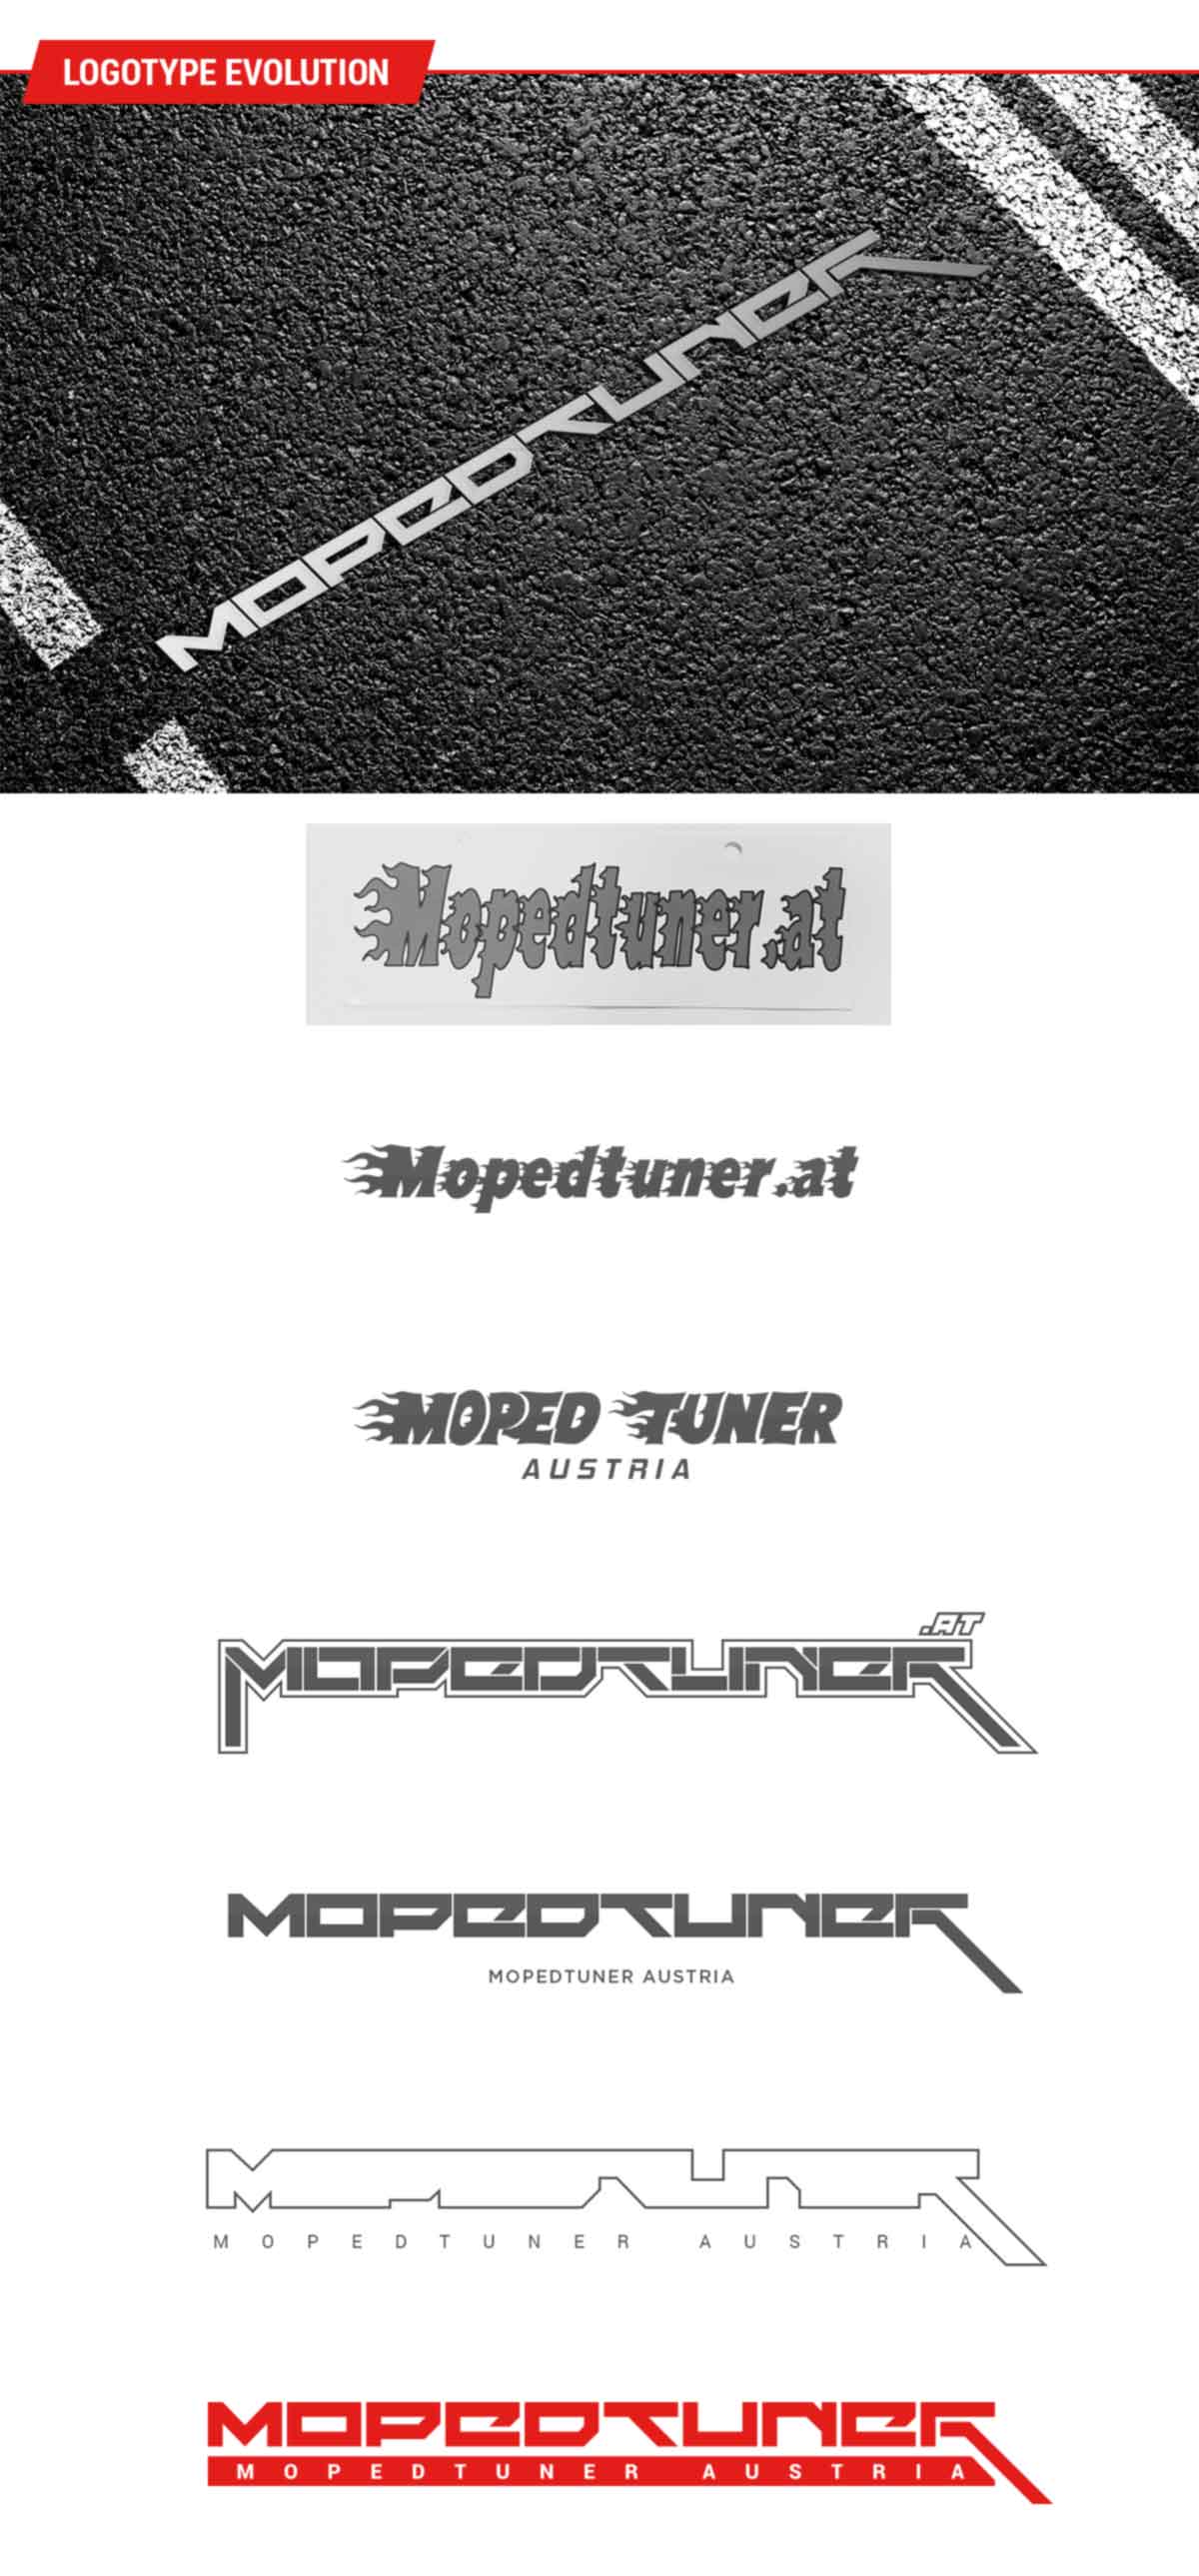 gregory-dreamer-project-mopedtuner-03-logotype